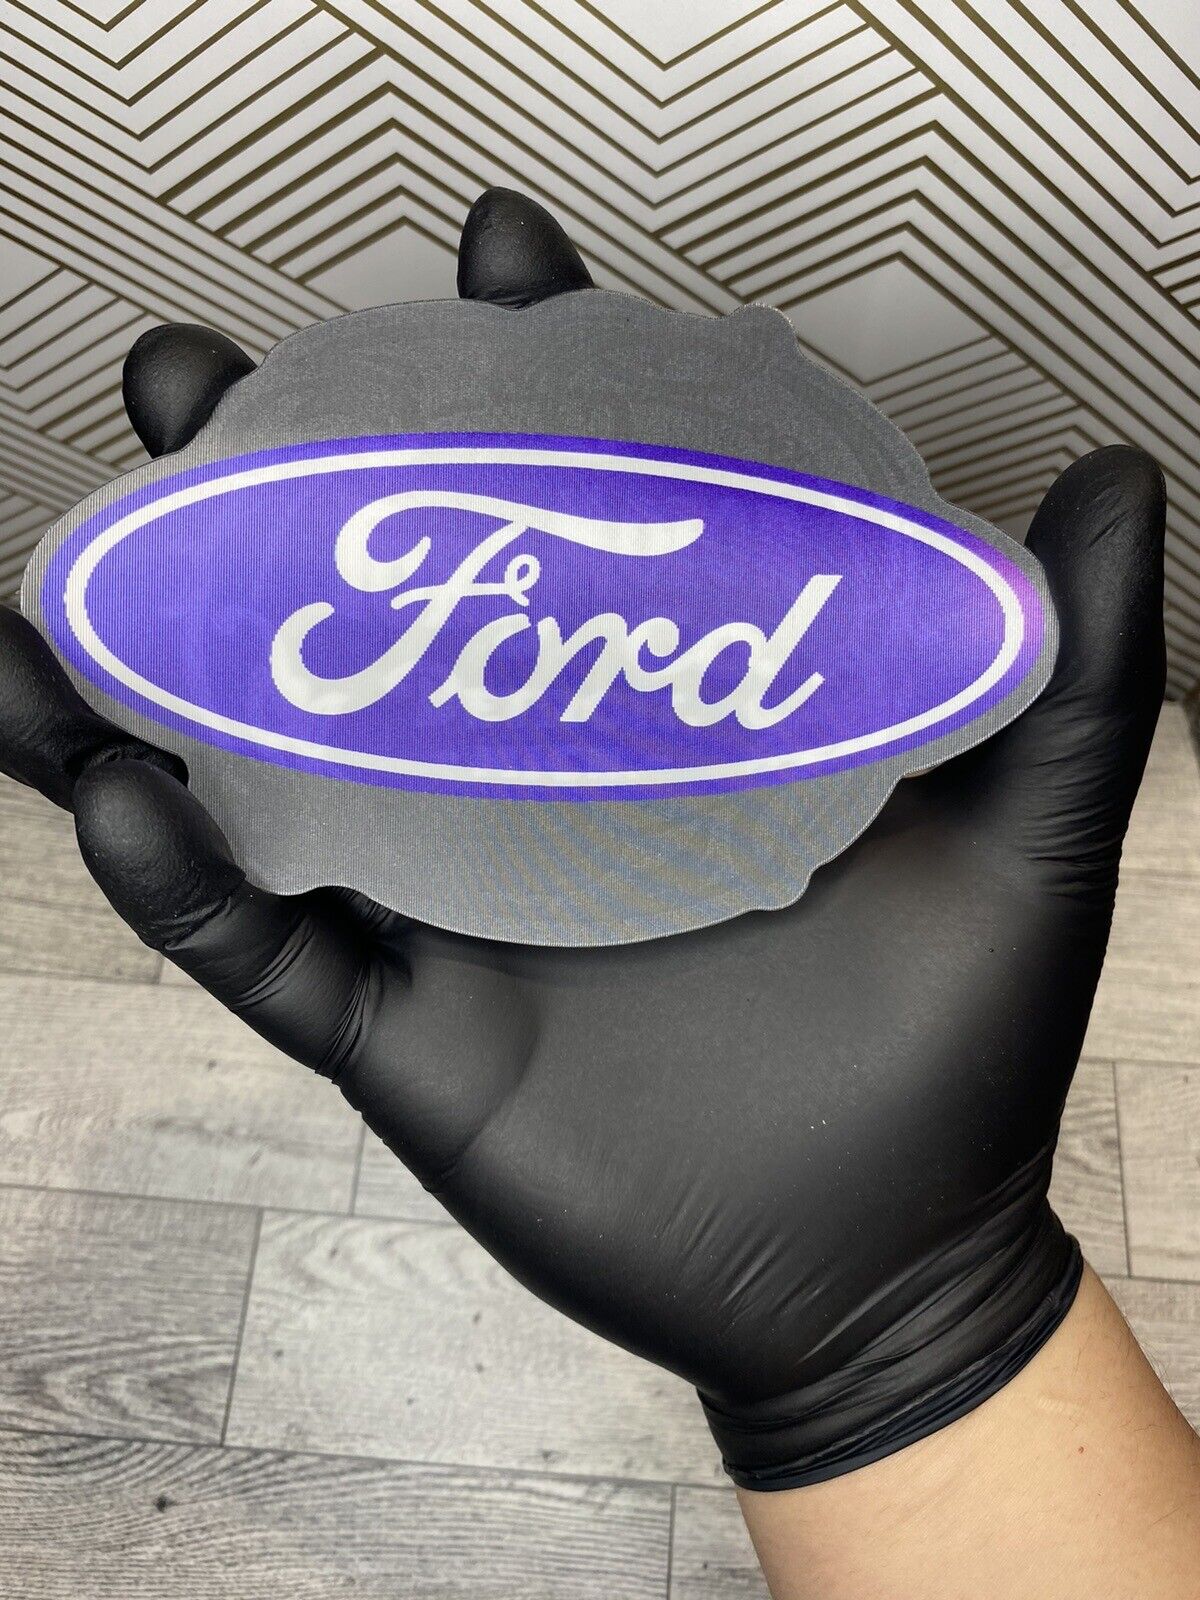 Ford 3D Lenticular Motion Car Sticker Decal Peeker